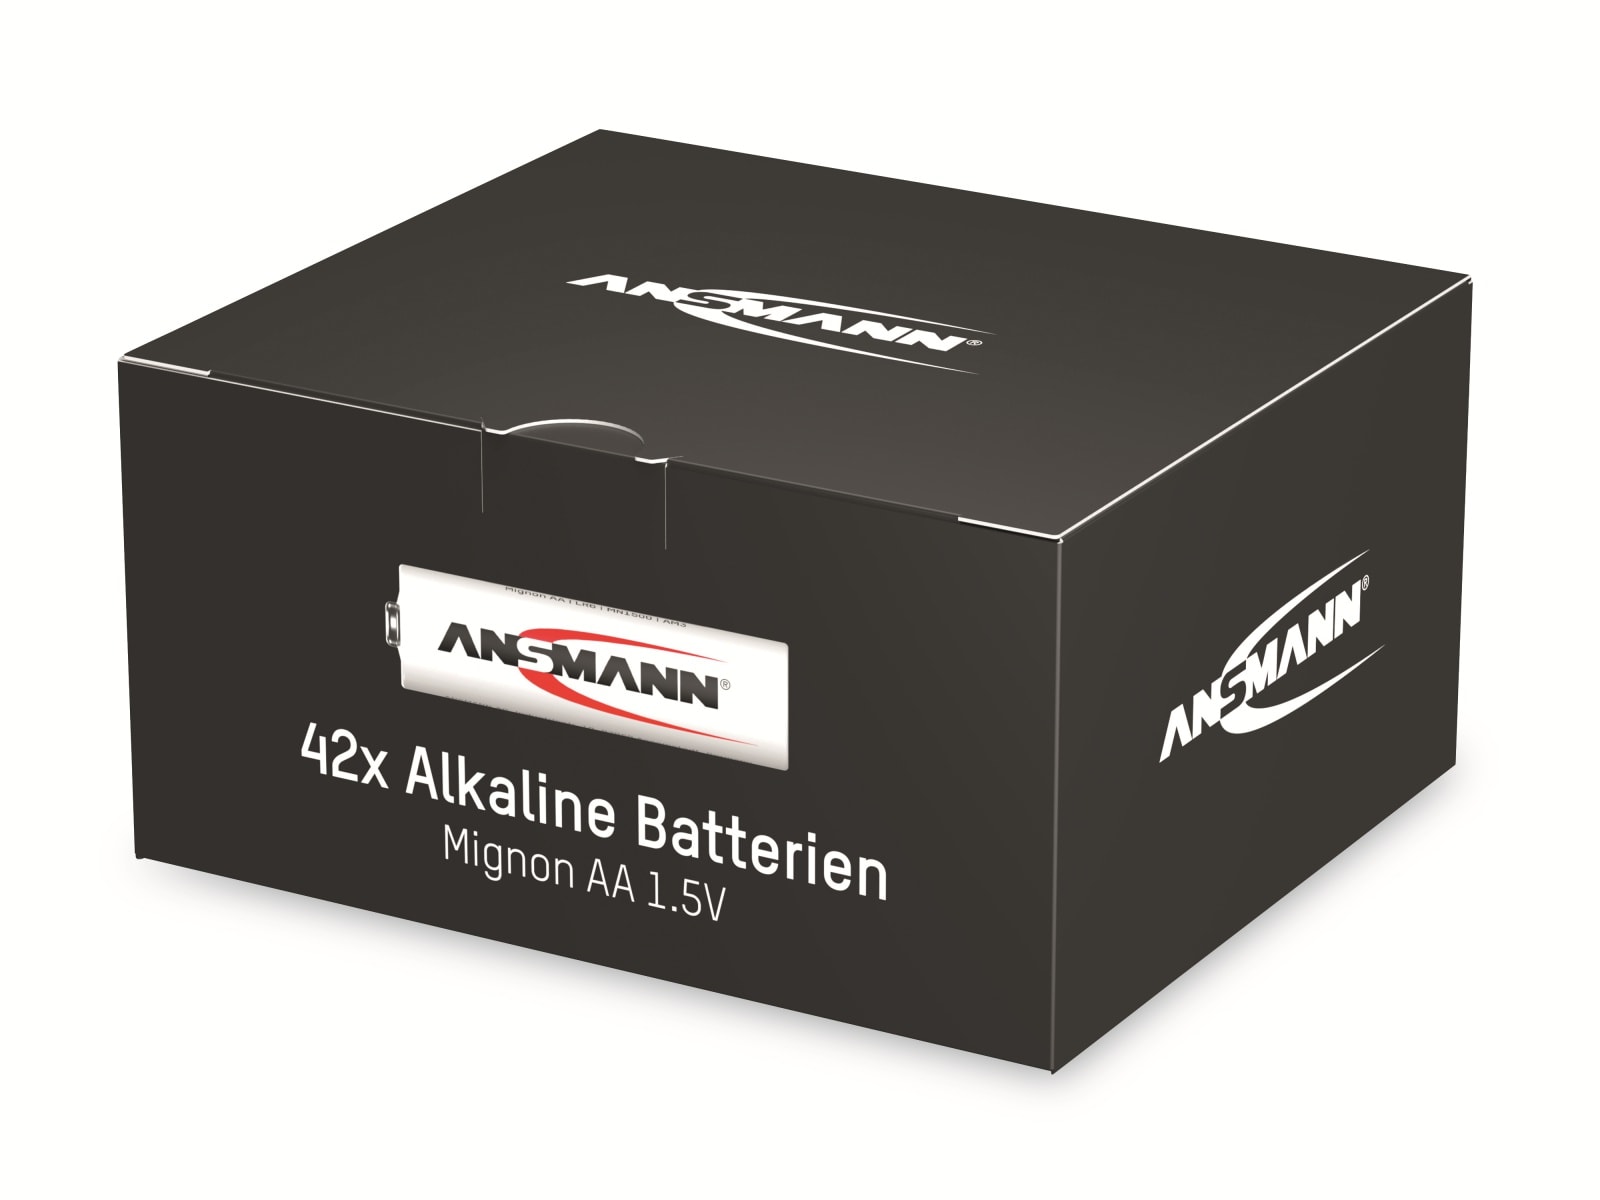 ANSMANN Alkaline Batterien, 42 Stück AA /Mignon und 42 Stück AAA/Micro im Sparset